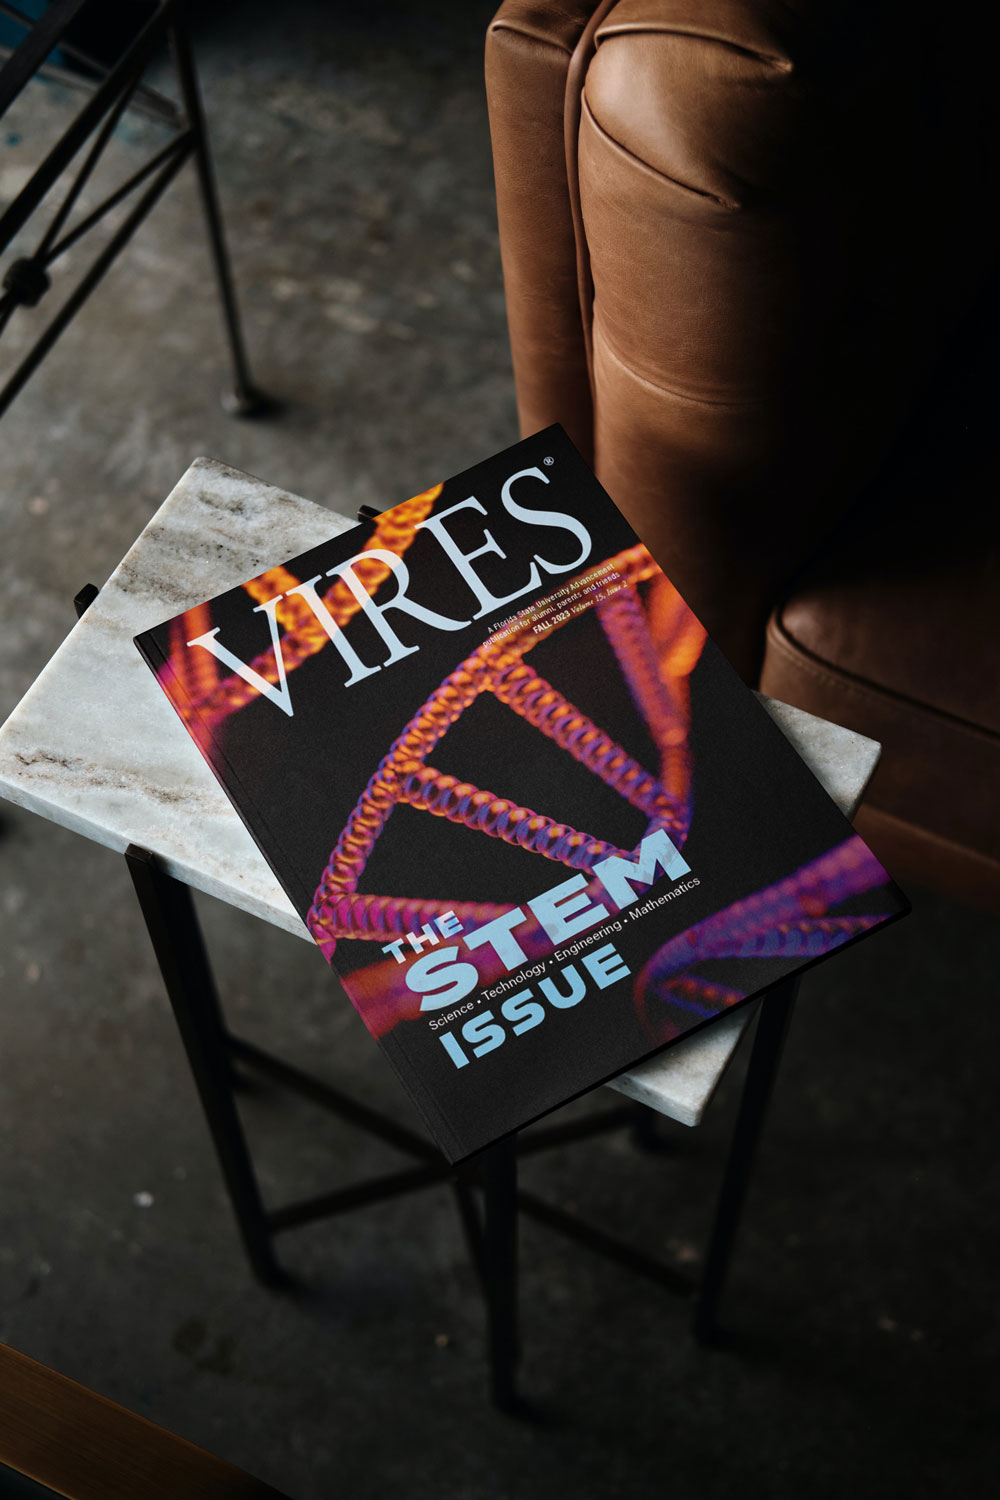 VIRES Magazine Cover